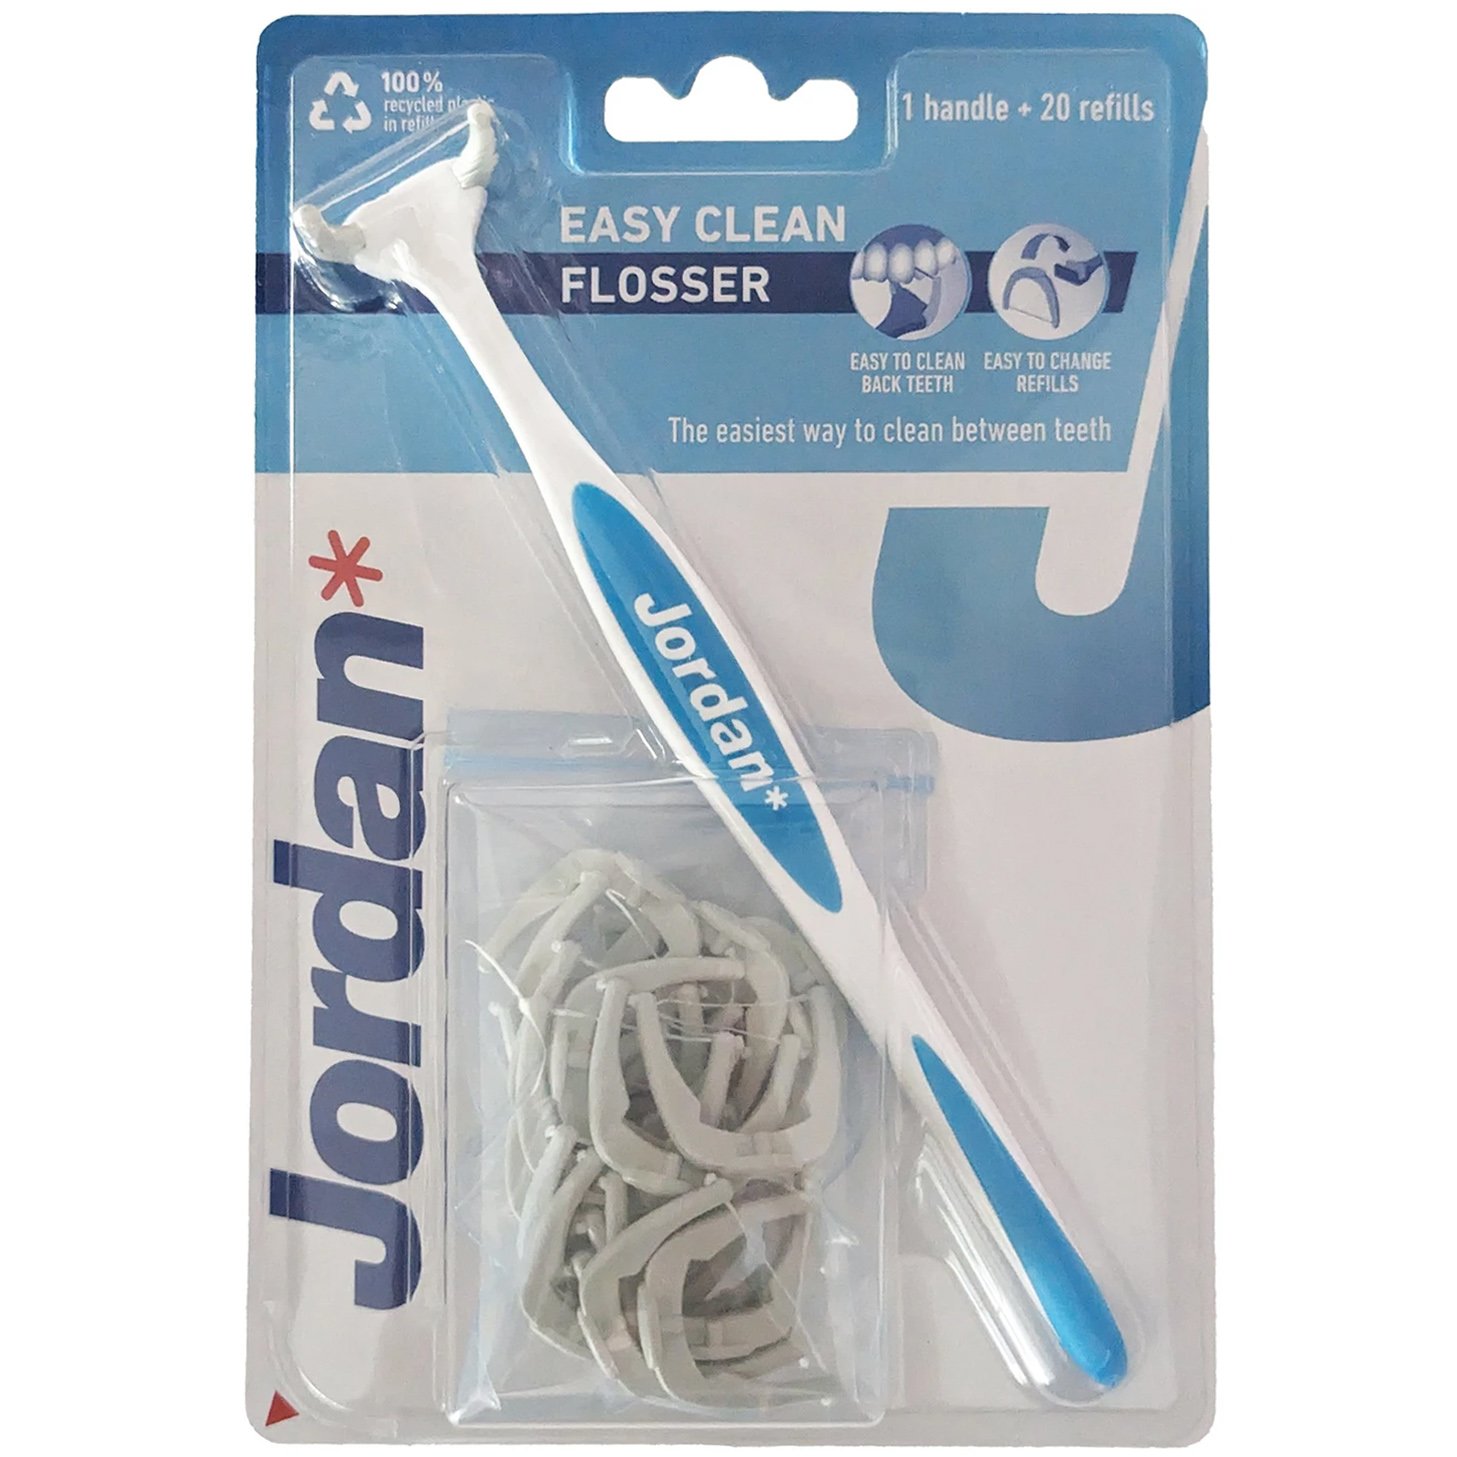 Jordan Easy Clean Flosser 1 Τεμάχιο & Refills 20 Τεμάχια Κωδ 310054 – Γαλάζιο